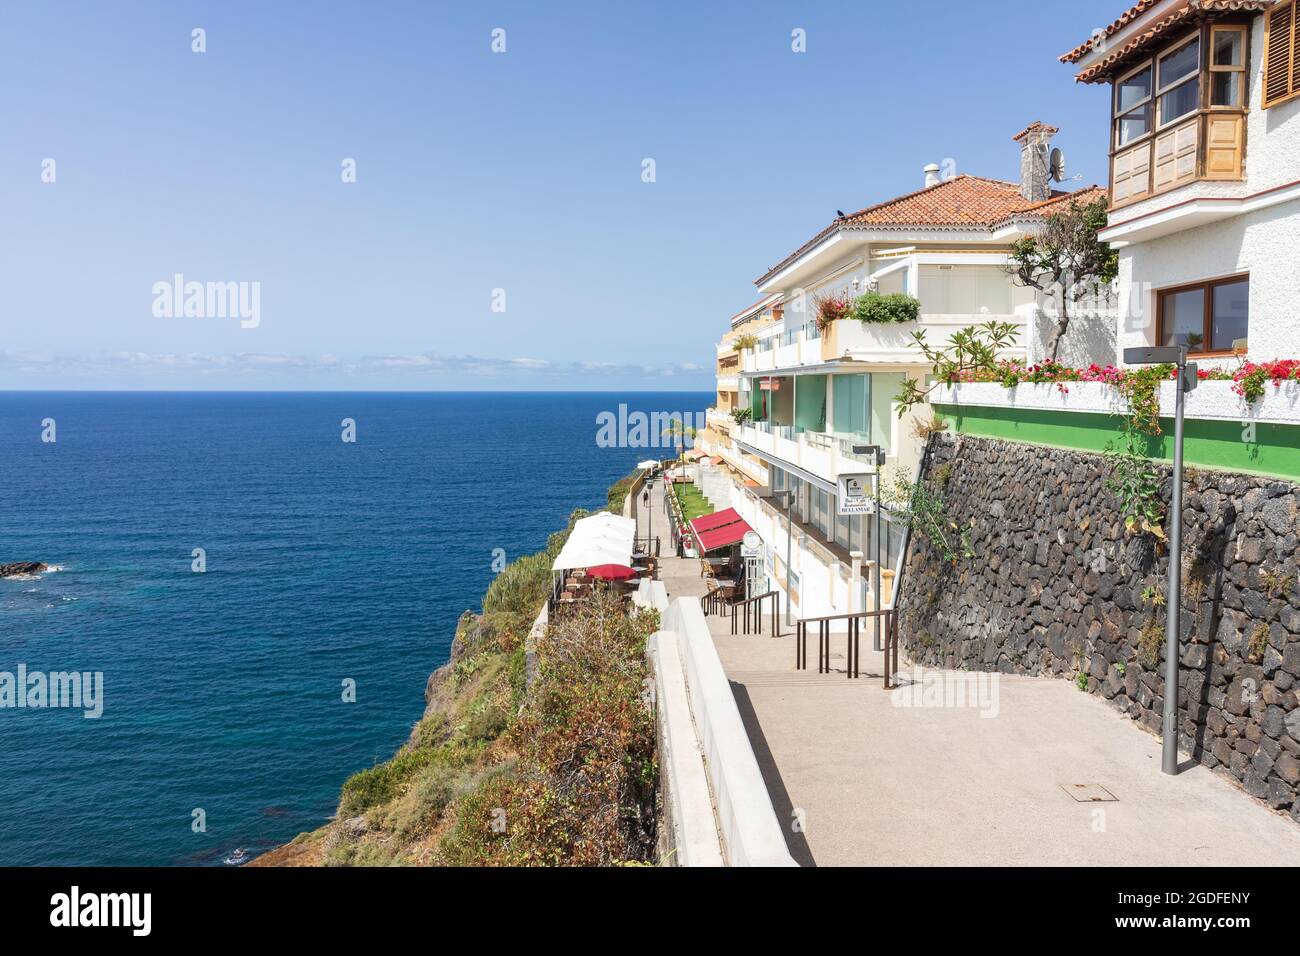 PUERTO DE LA CRUZ, SPAIN - JULY 02, 2021: Promenade on a hill overlooking the ocean. Tenerife, Canary Islands. Stock Photo